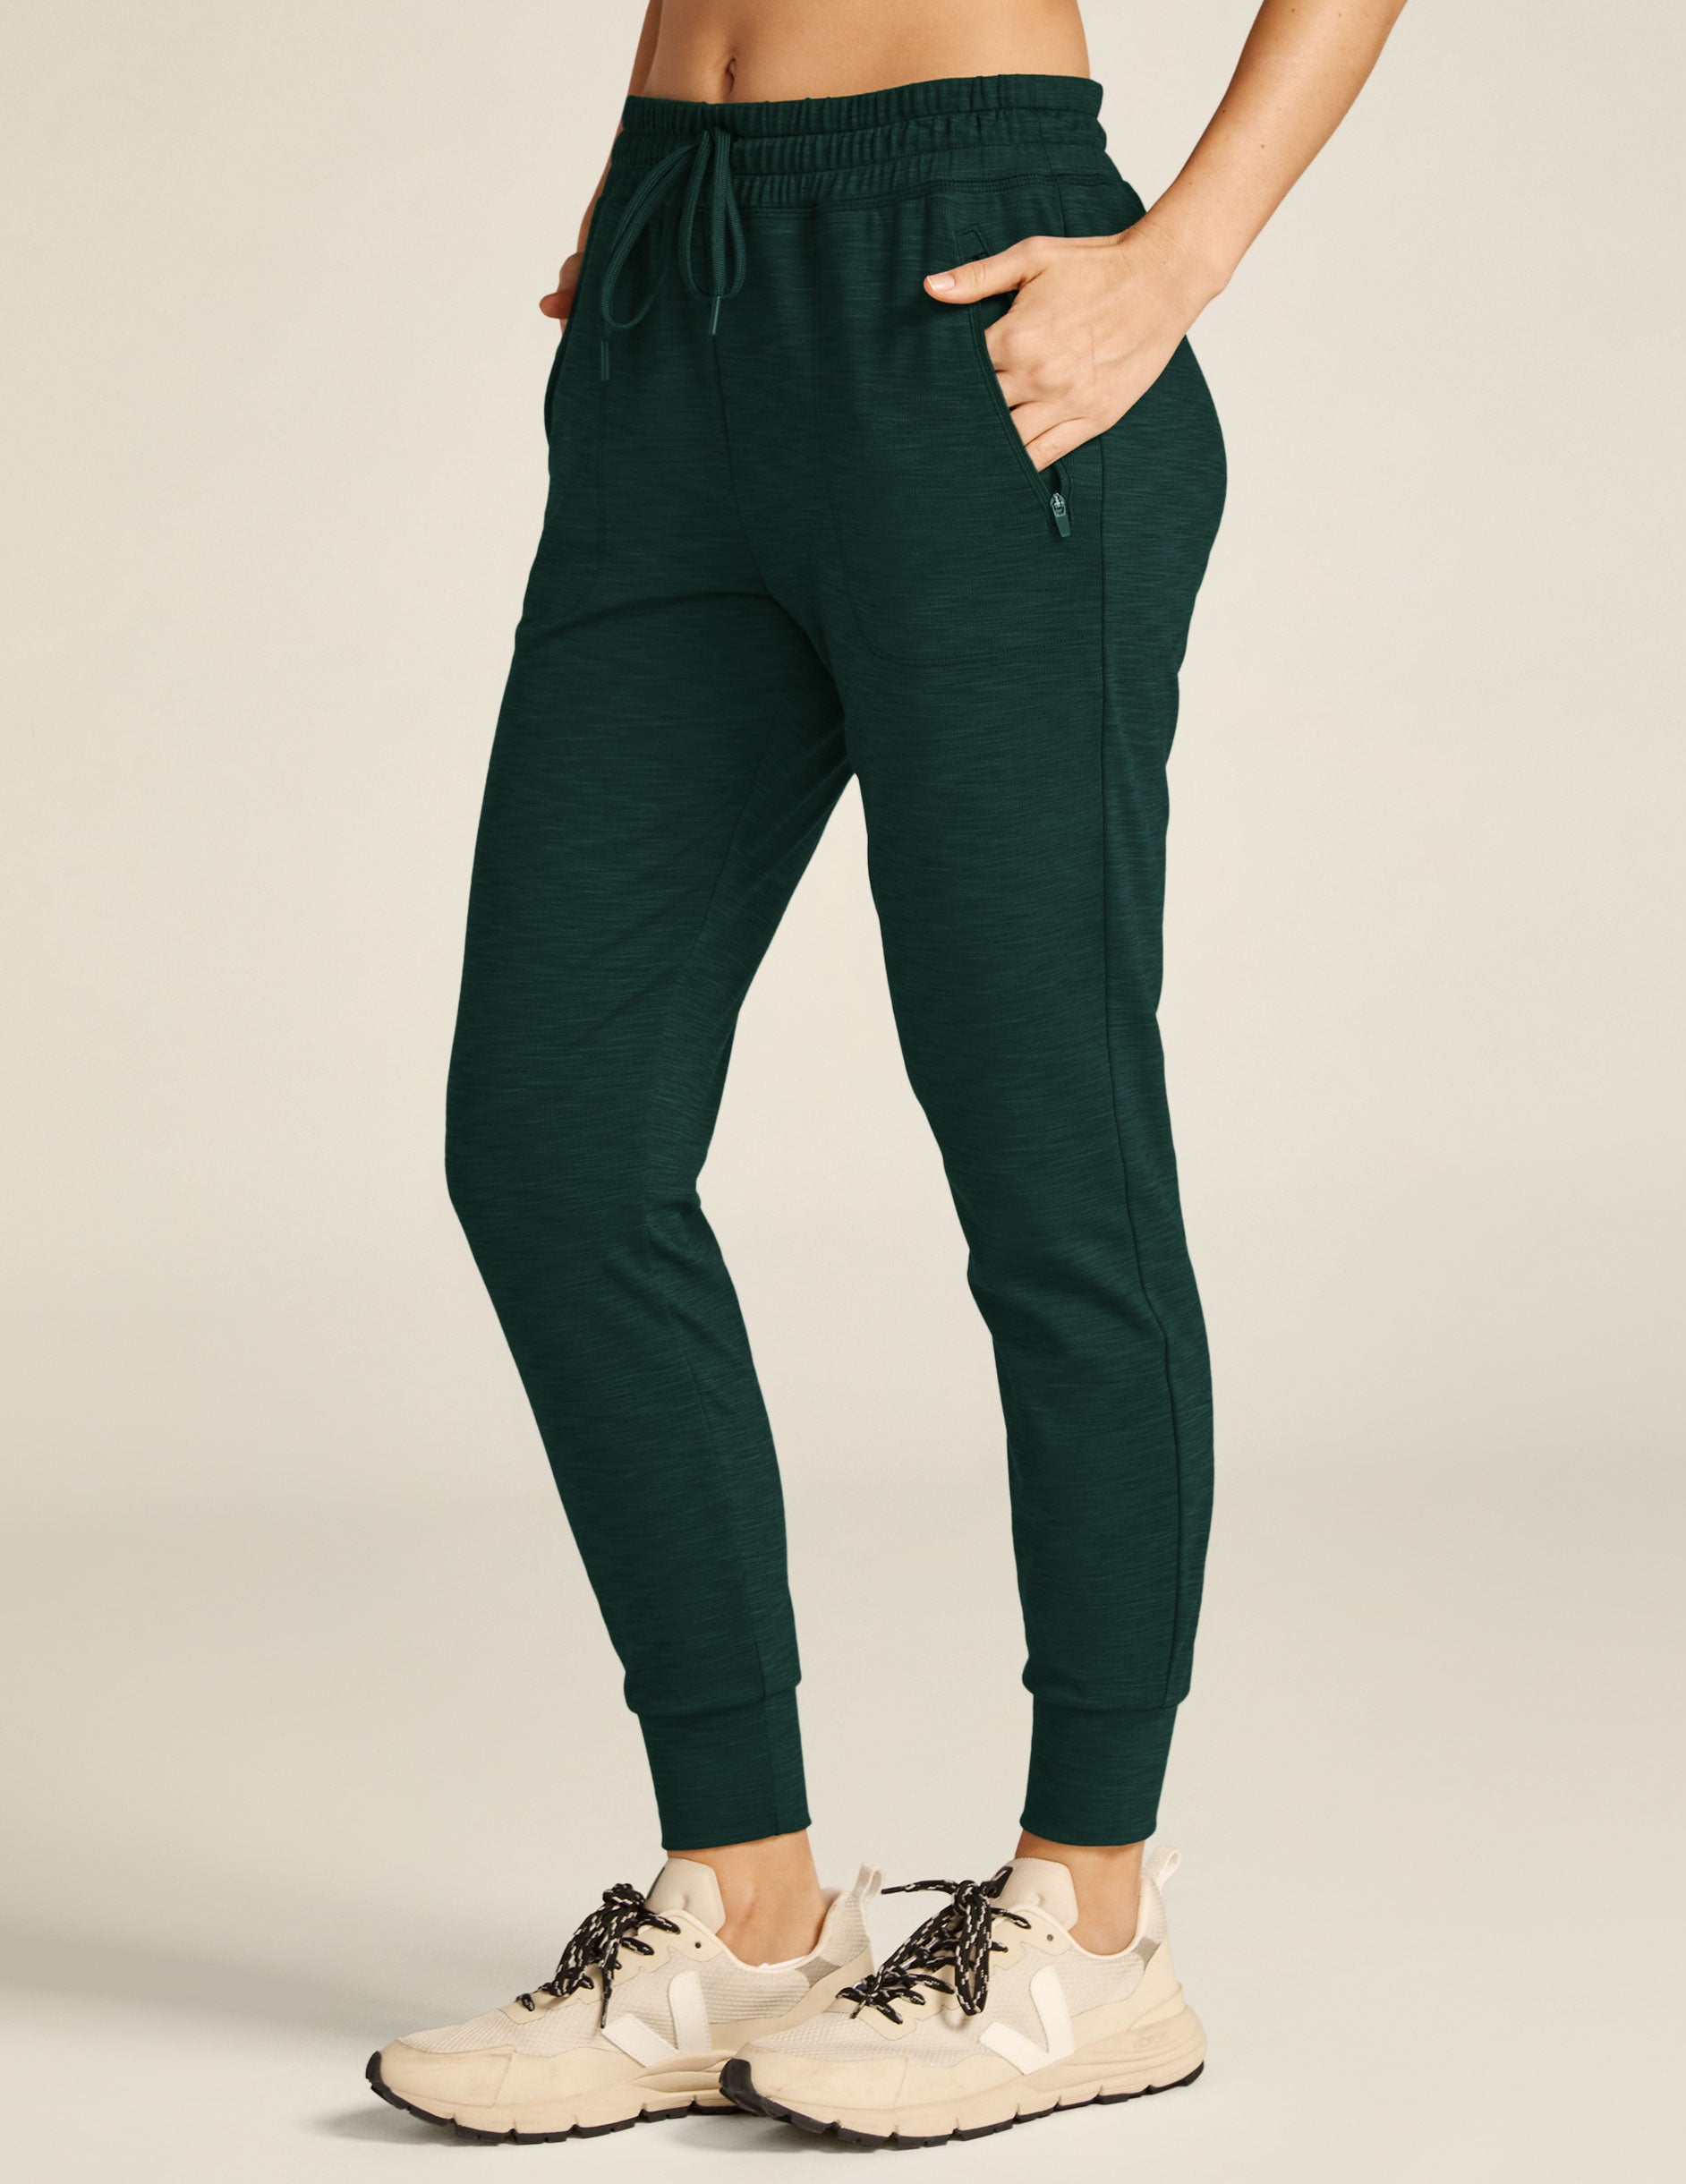 green midi length joggers with pockets. 